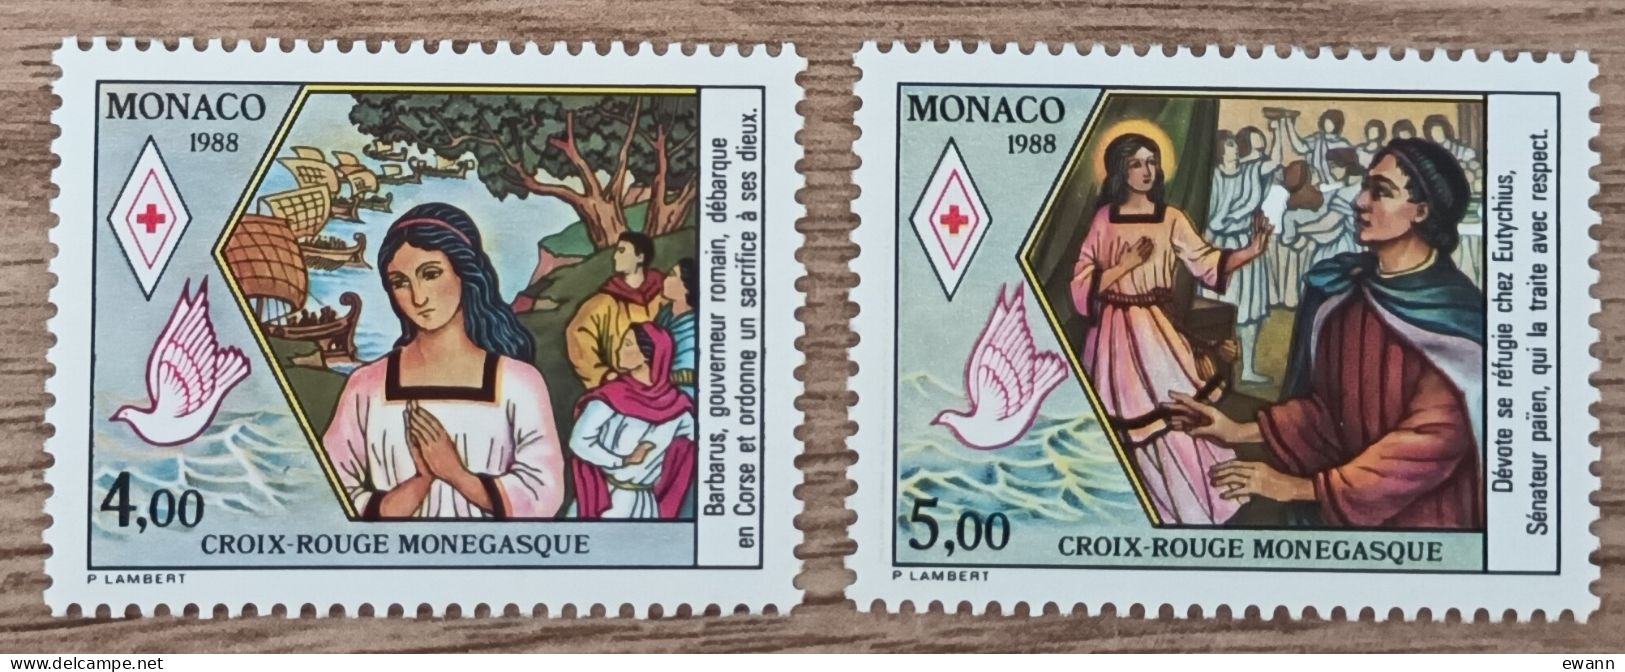 Monaco - YT N°1649, 1650 - Croix Rouge Monégasque - 1988 - Neuf - Nuovi